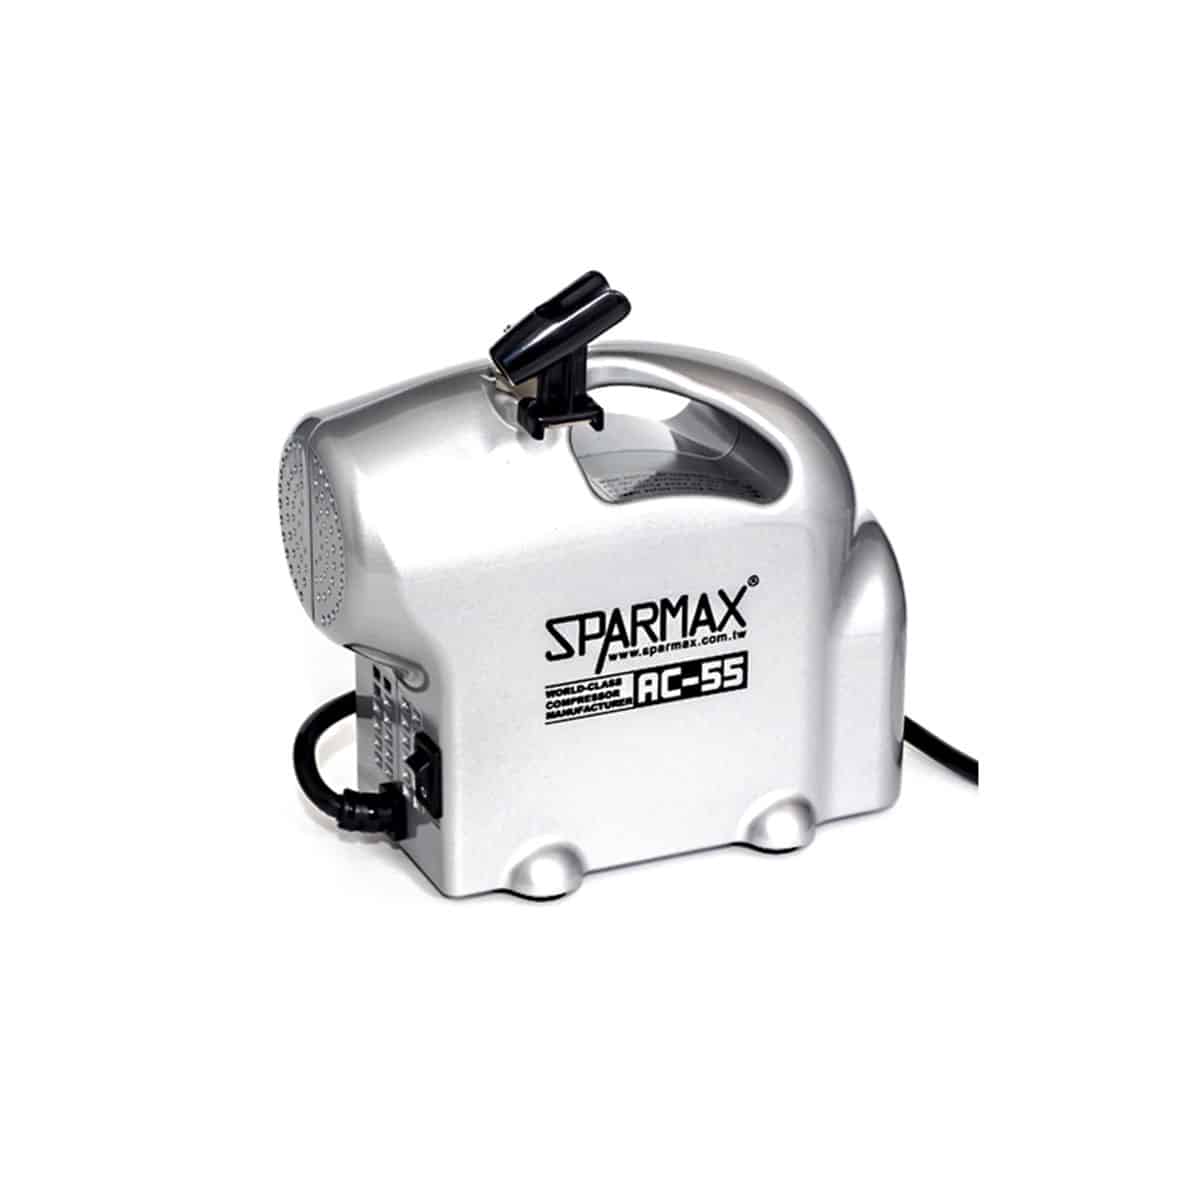 Copic Sparmax AC-55 Mini Air Compressor Suitup - Supplies